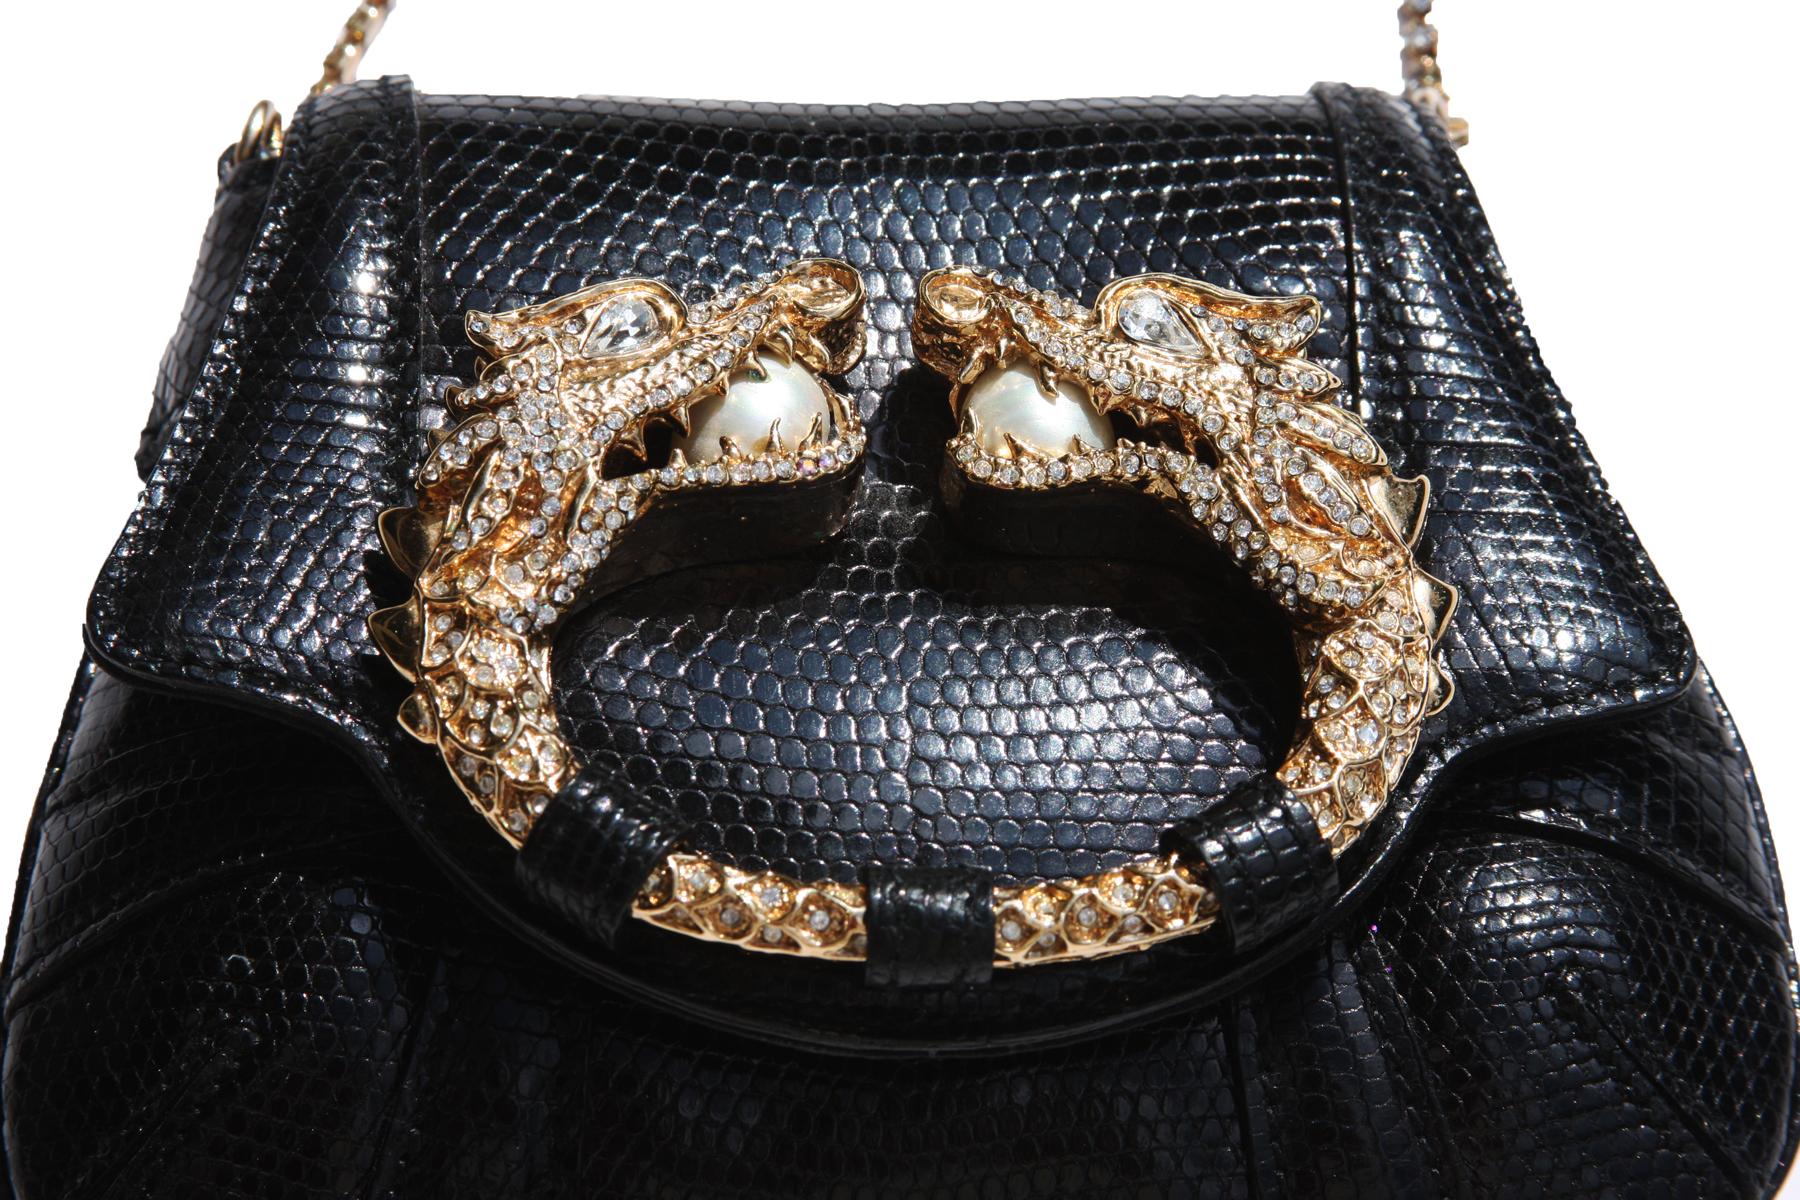 Black Tom Ford for Gucci F/W 2004 Lizard Evening Clutch Bag Jeweled Dragon 